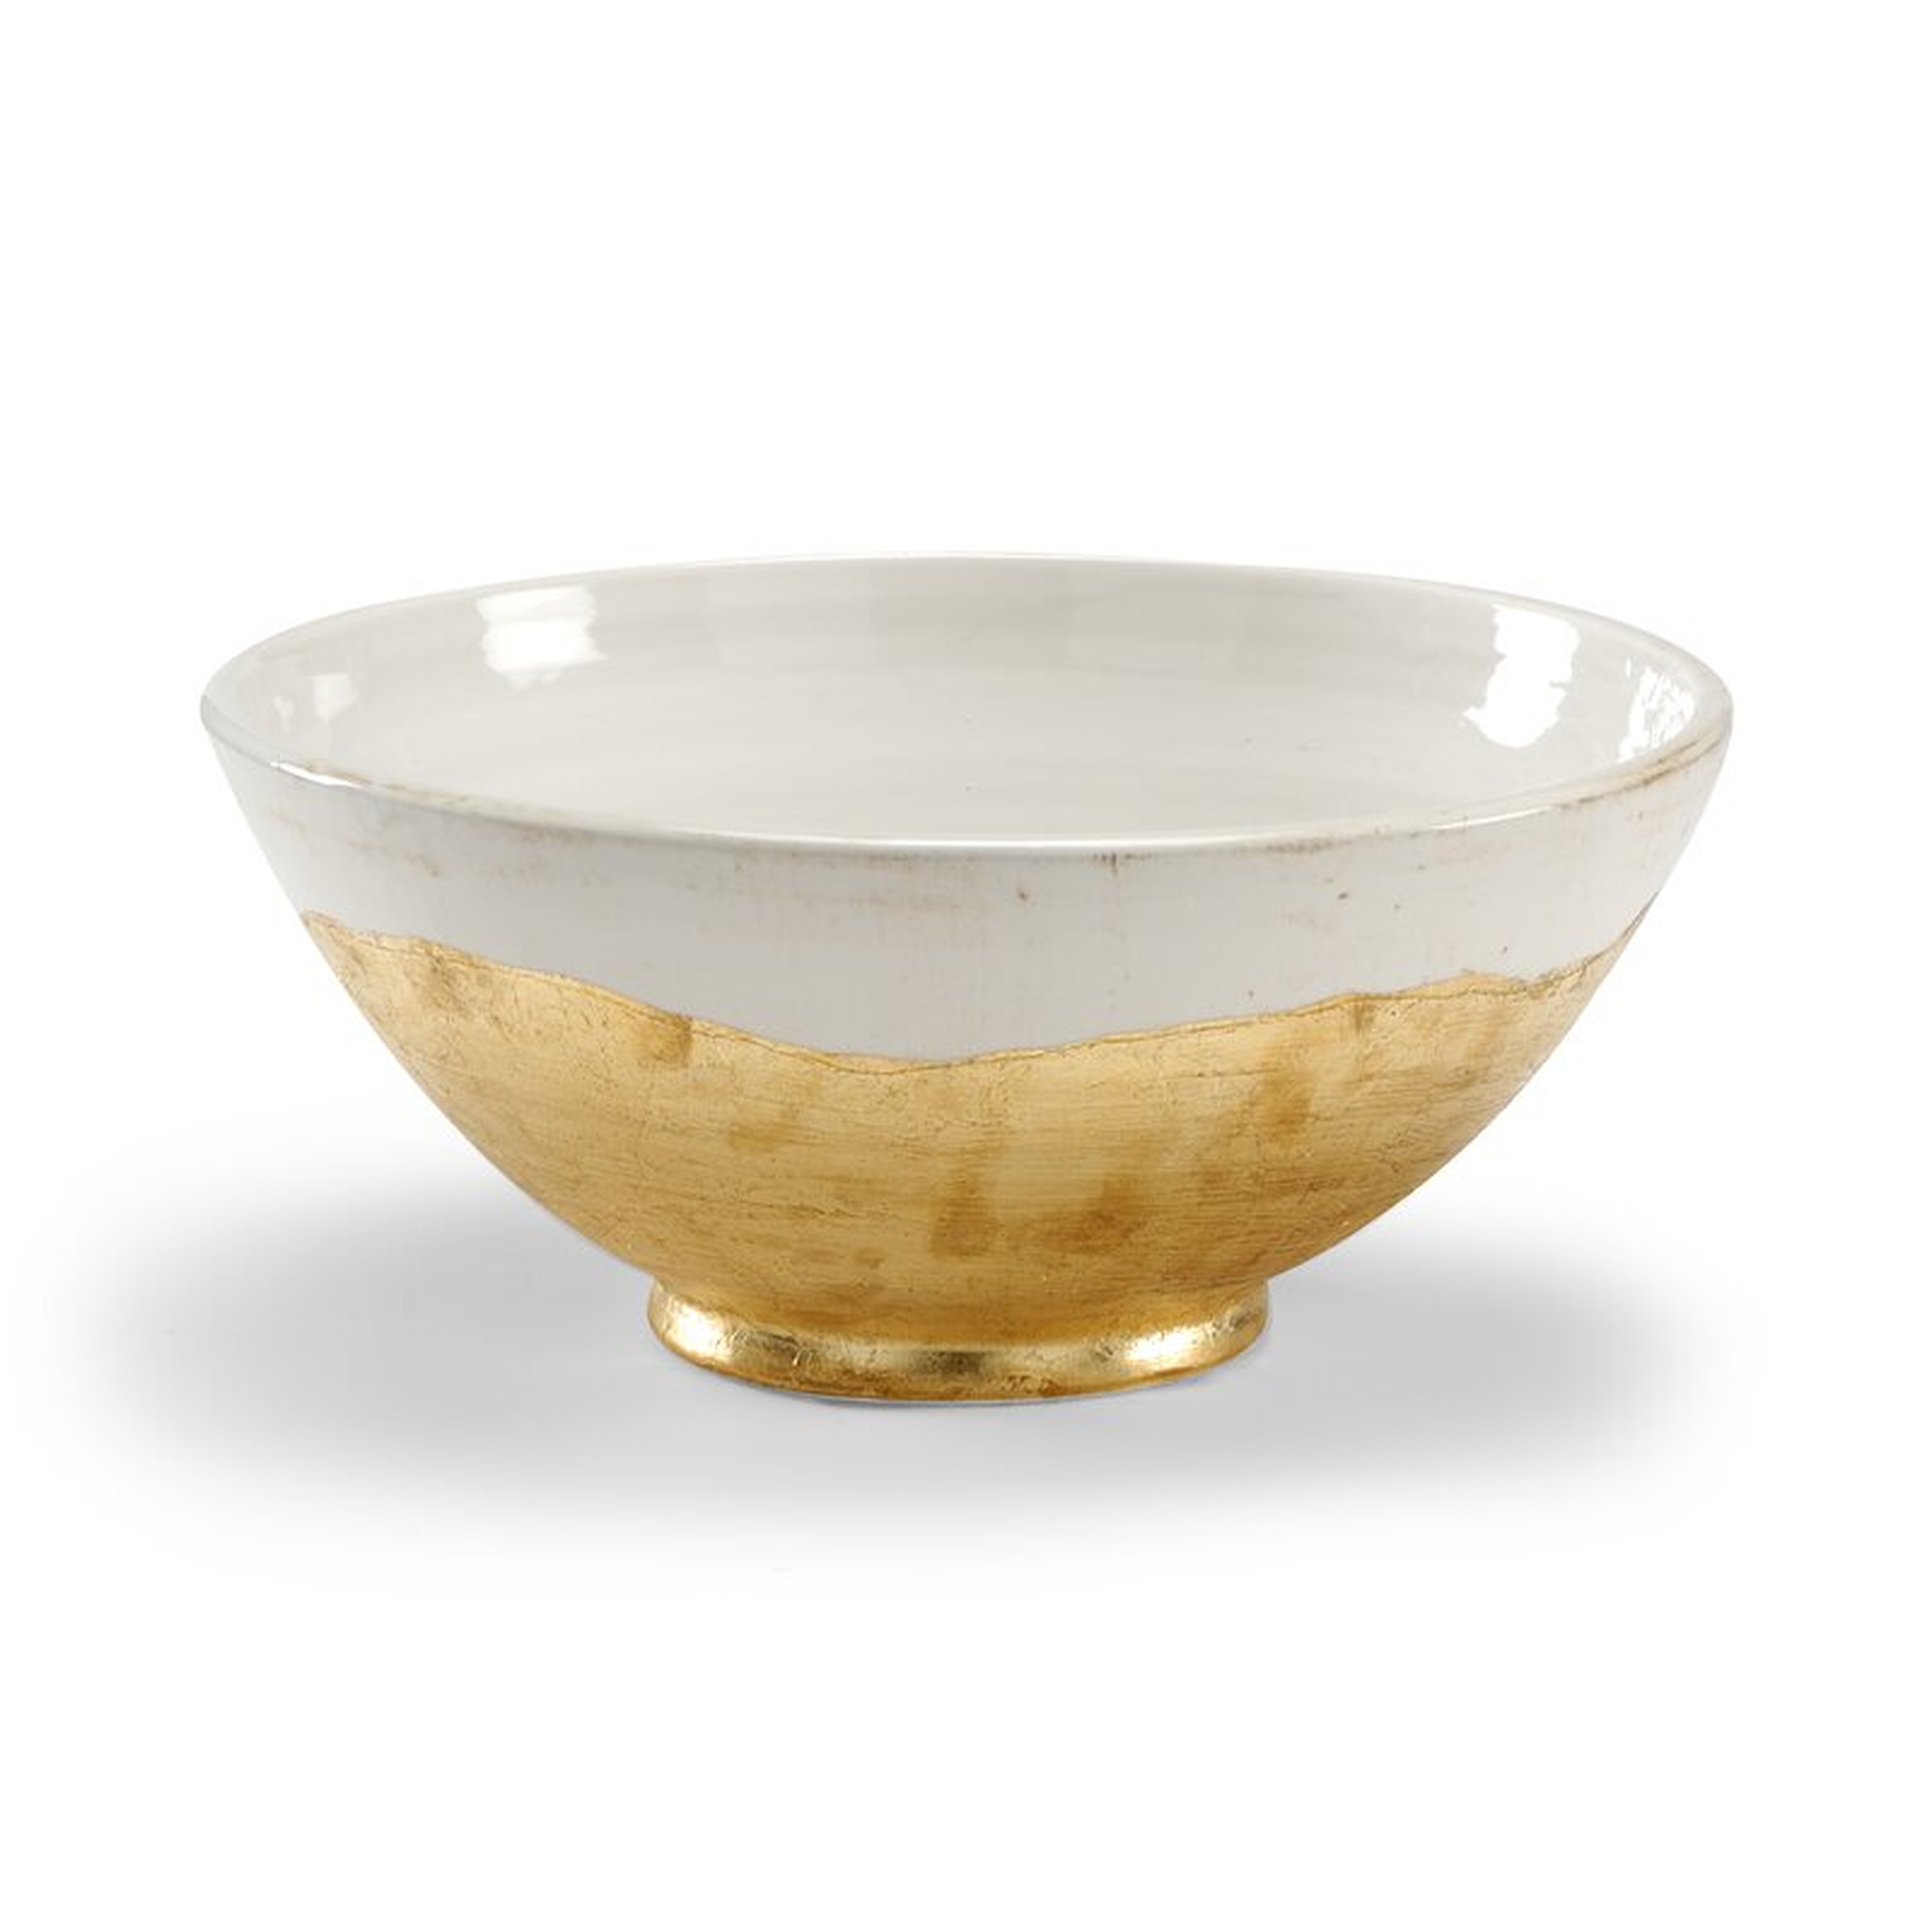 Wildwood Ceramic Decorative Bowl in White Glaze/Gold Leaf - Perigold